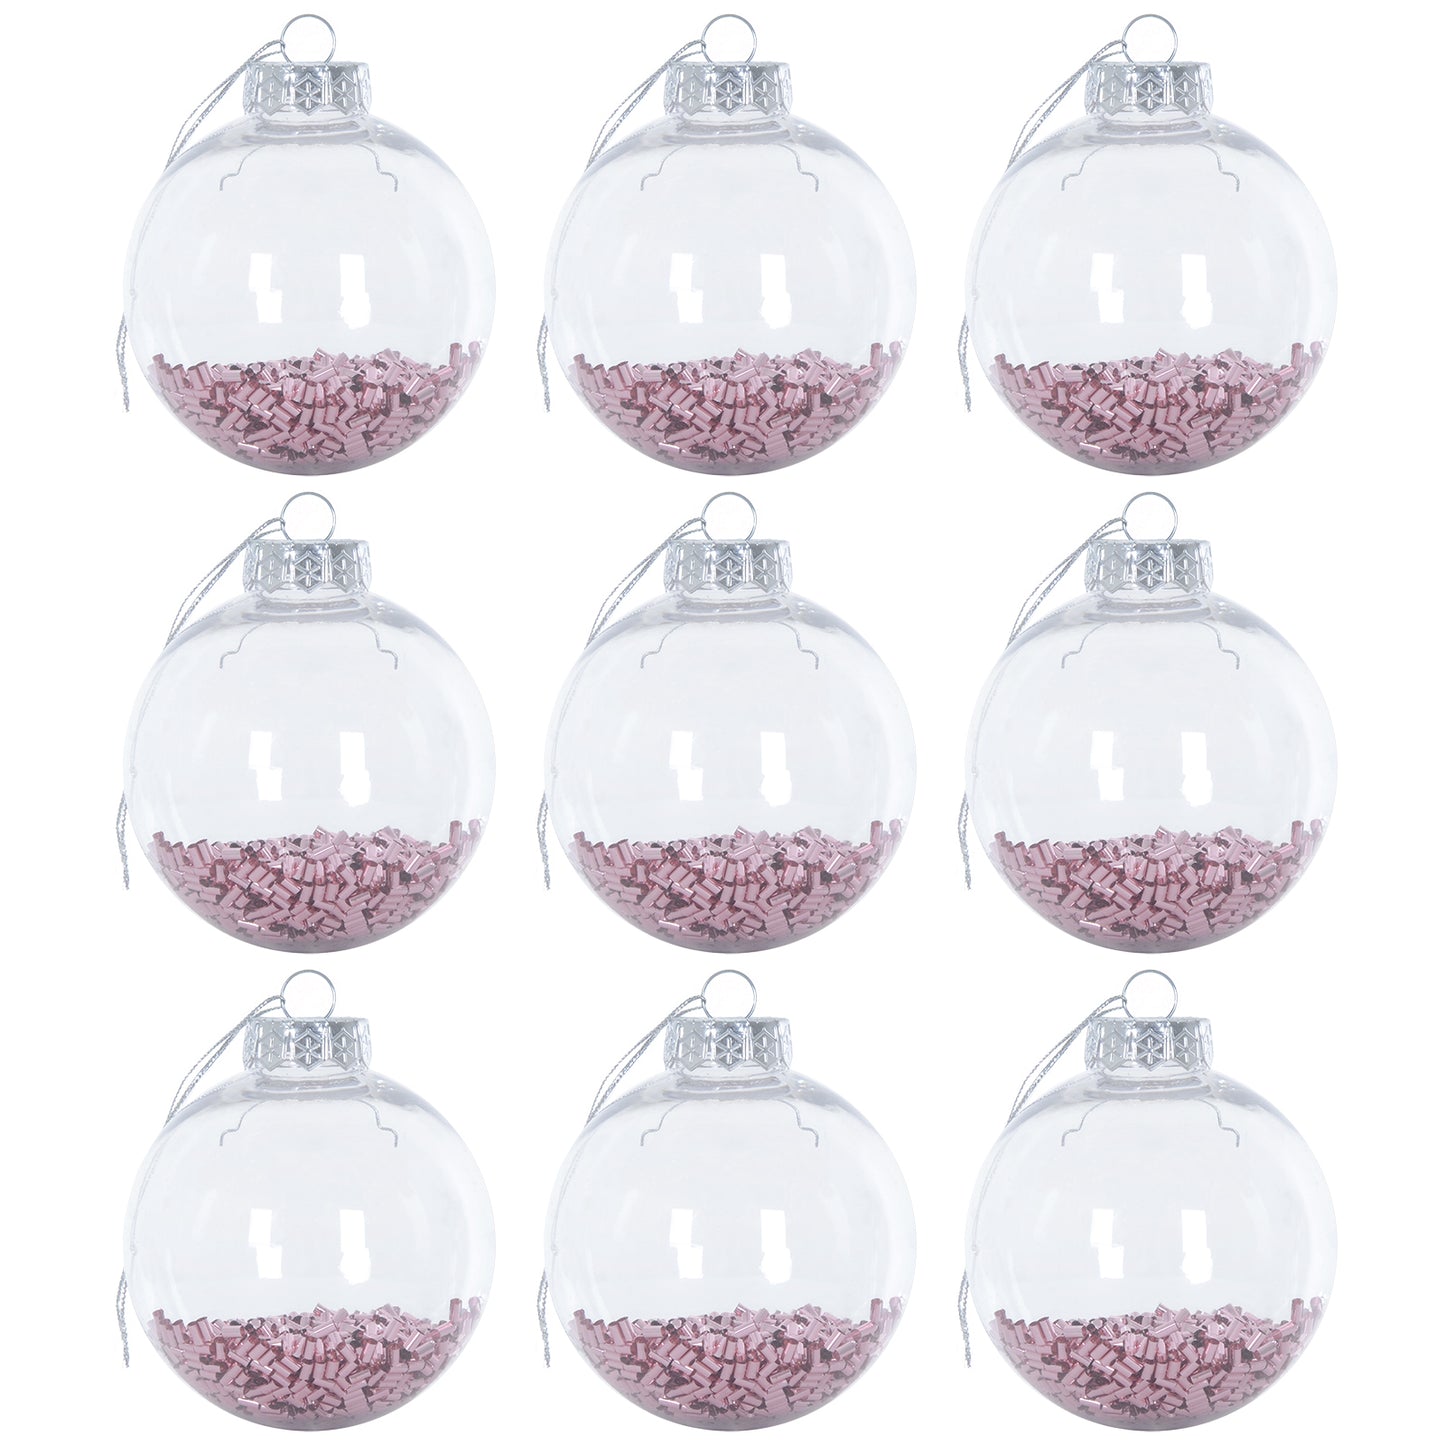 Mr Crimbo 9 x 8cm Foil Filled Shaker Christmas Tree Baubles - MrCrimbo.co.uk -XS6465 - Pink -Baubles